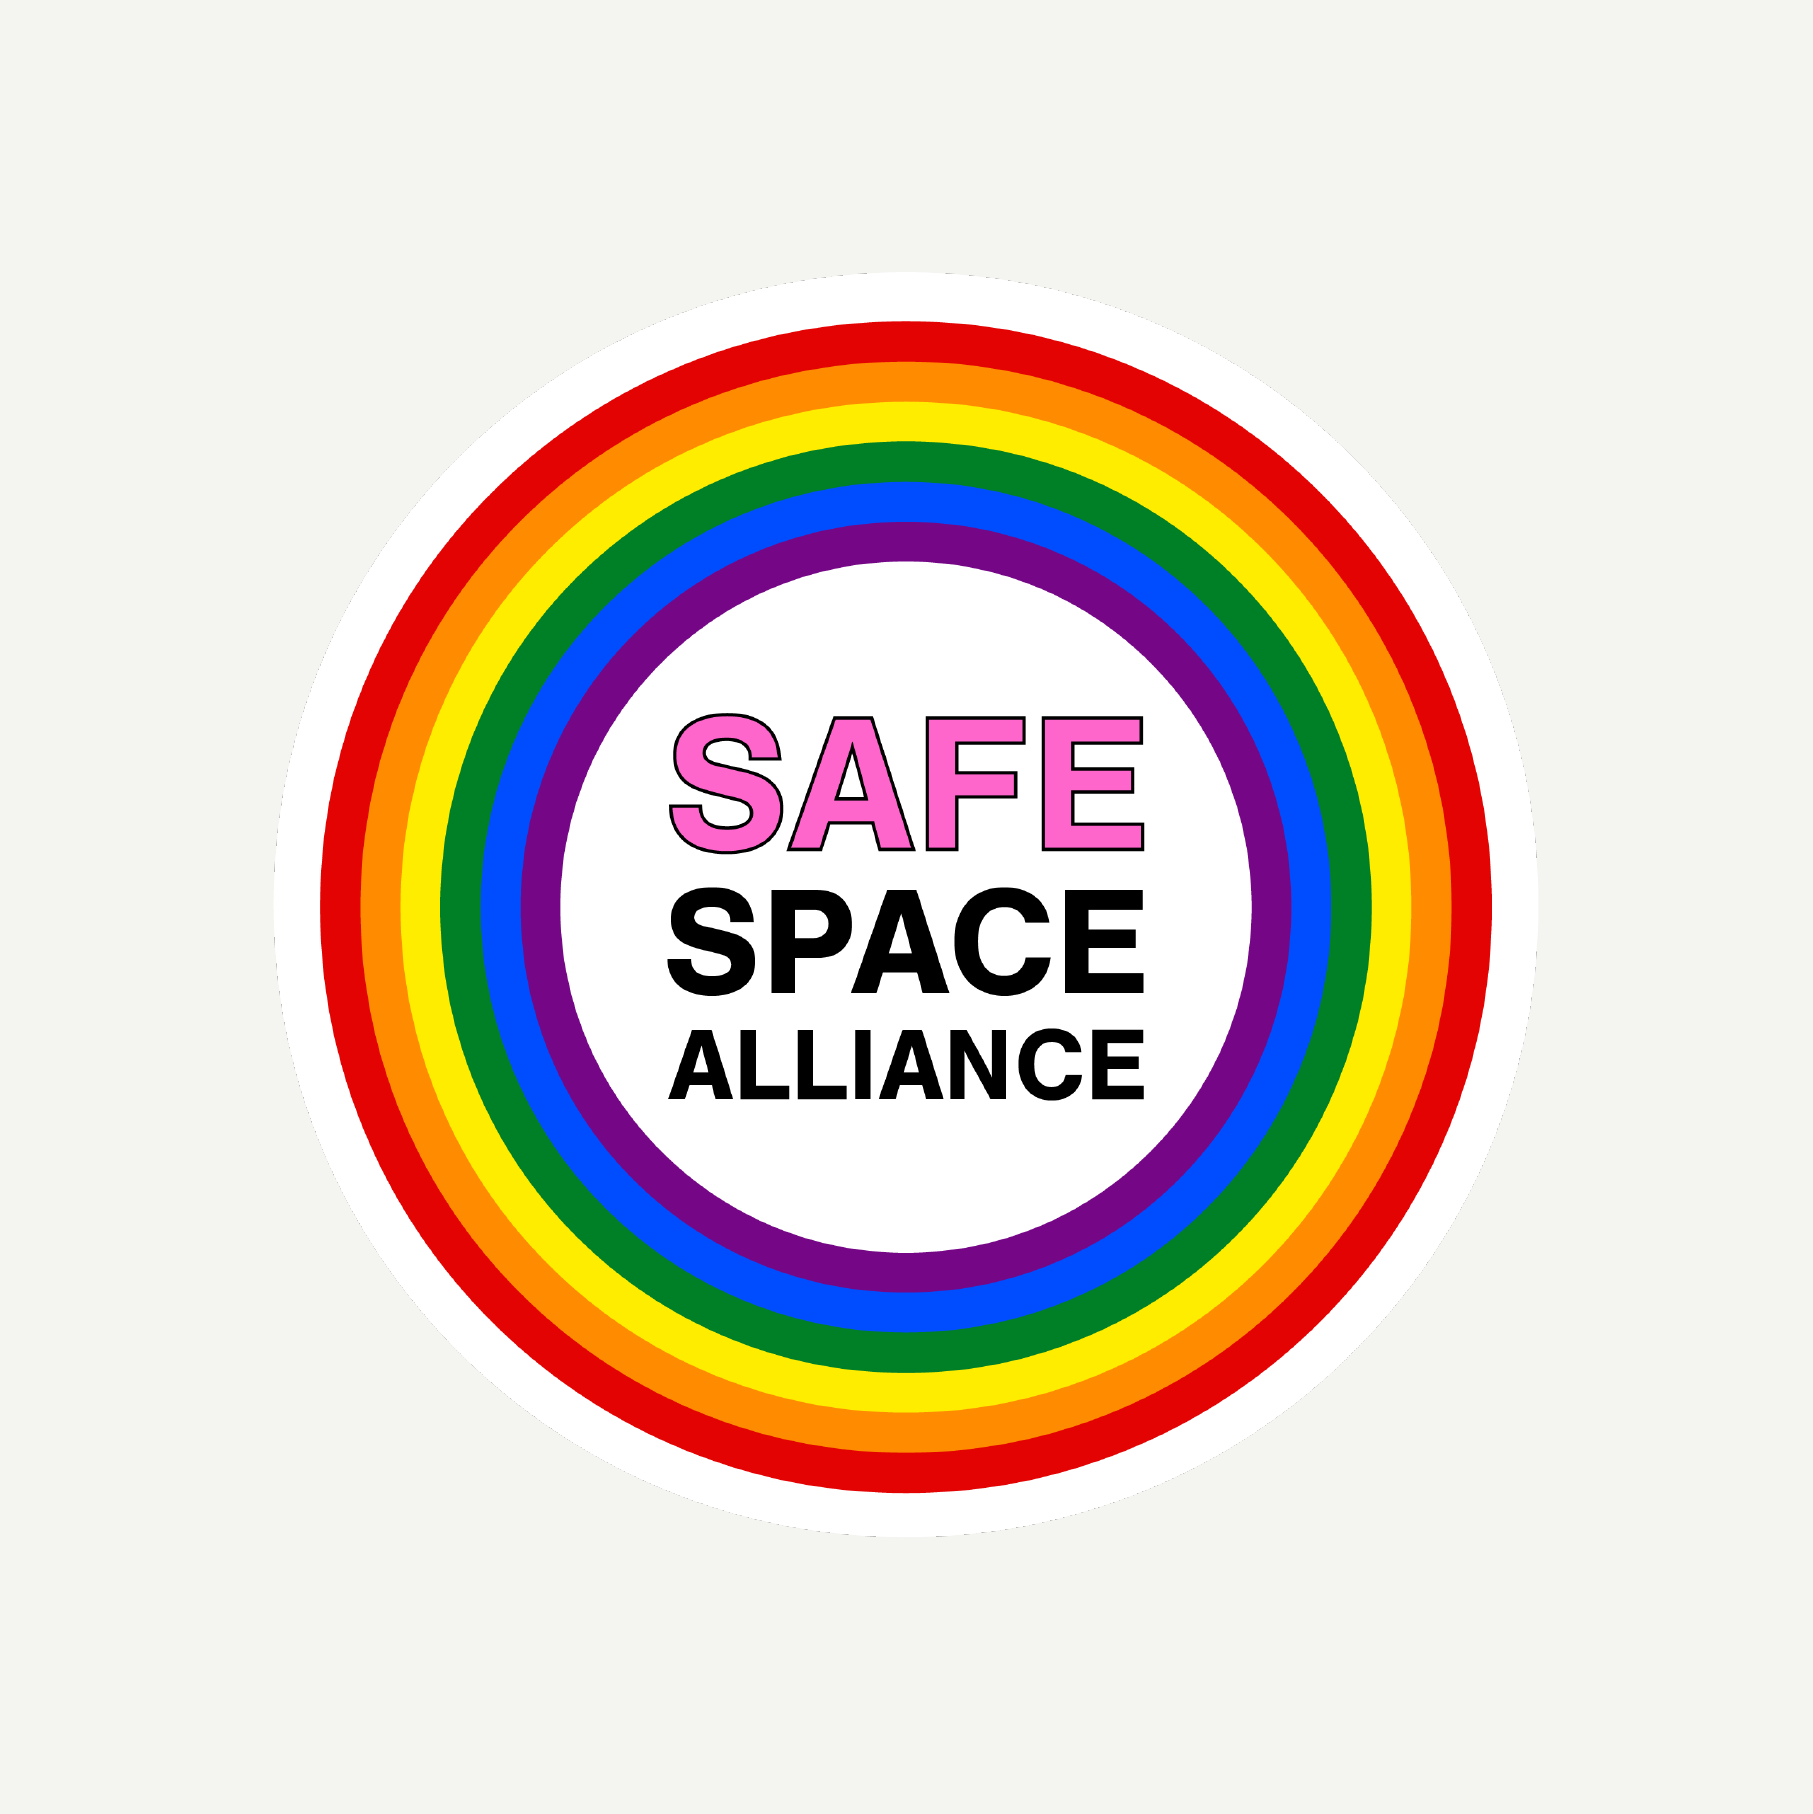 The Safe Space Alliance logo.